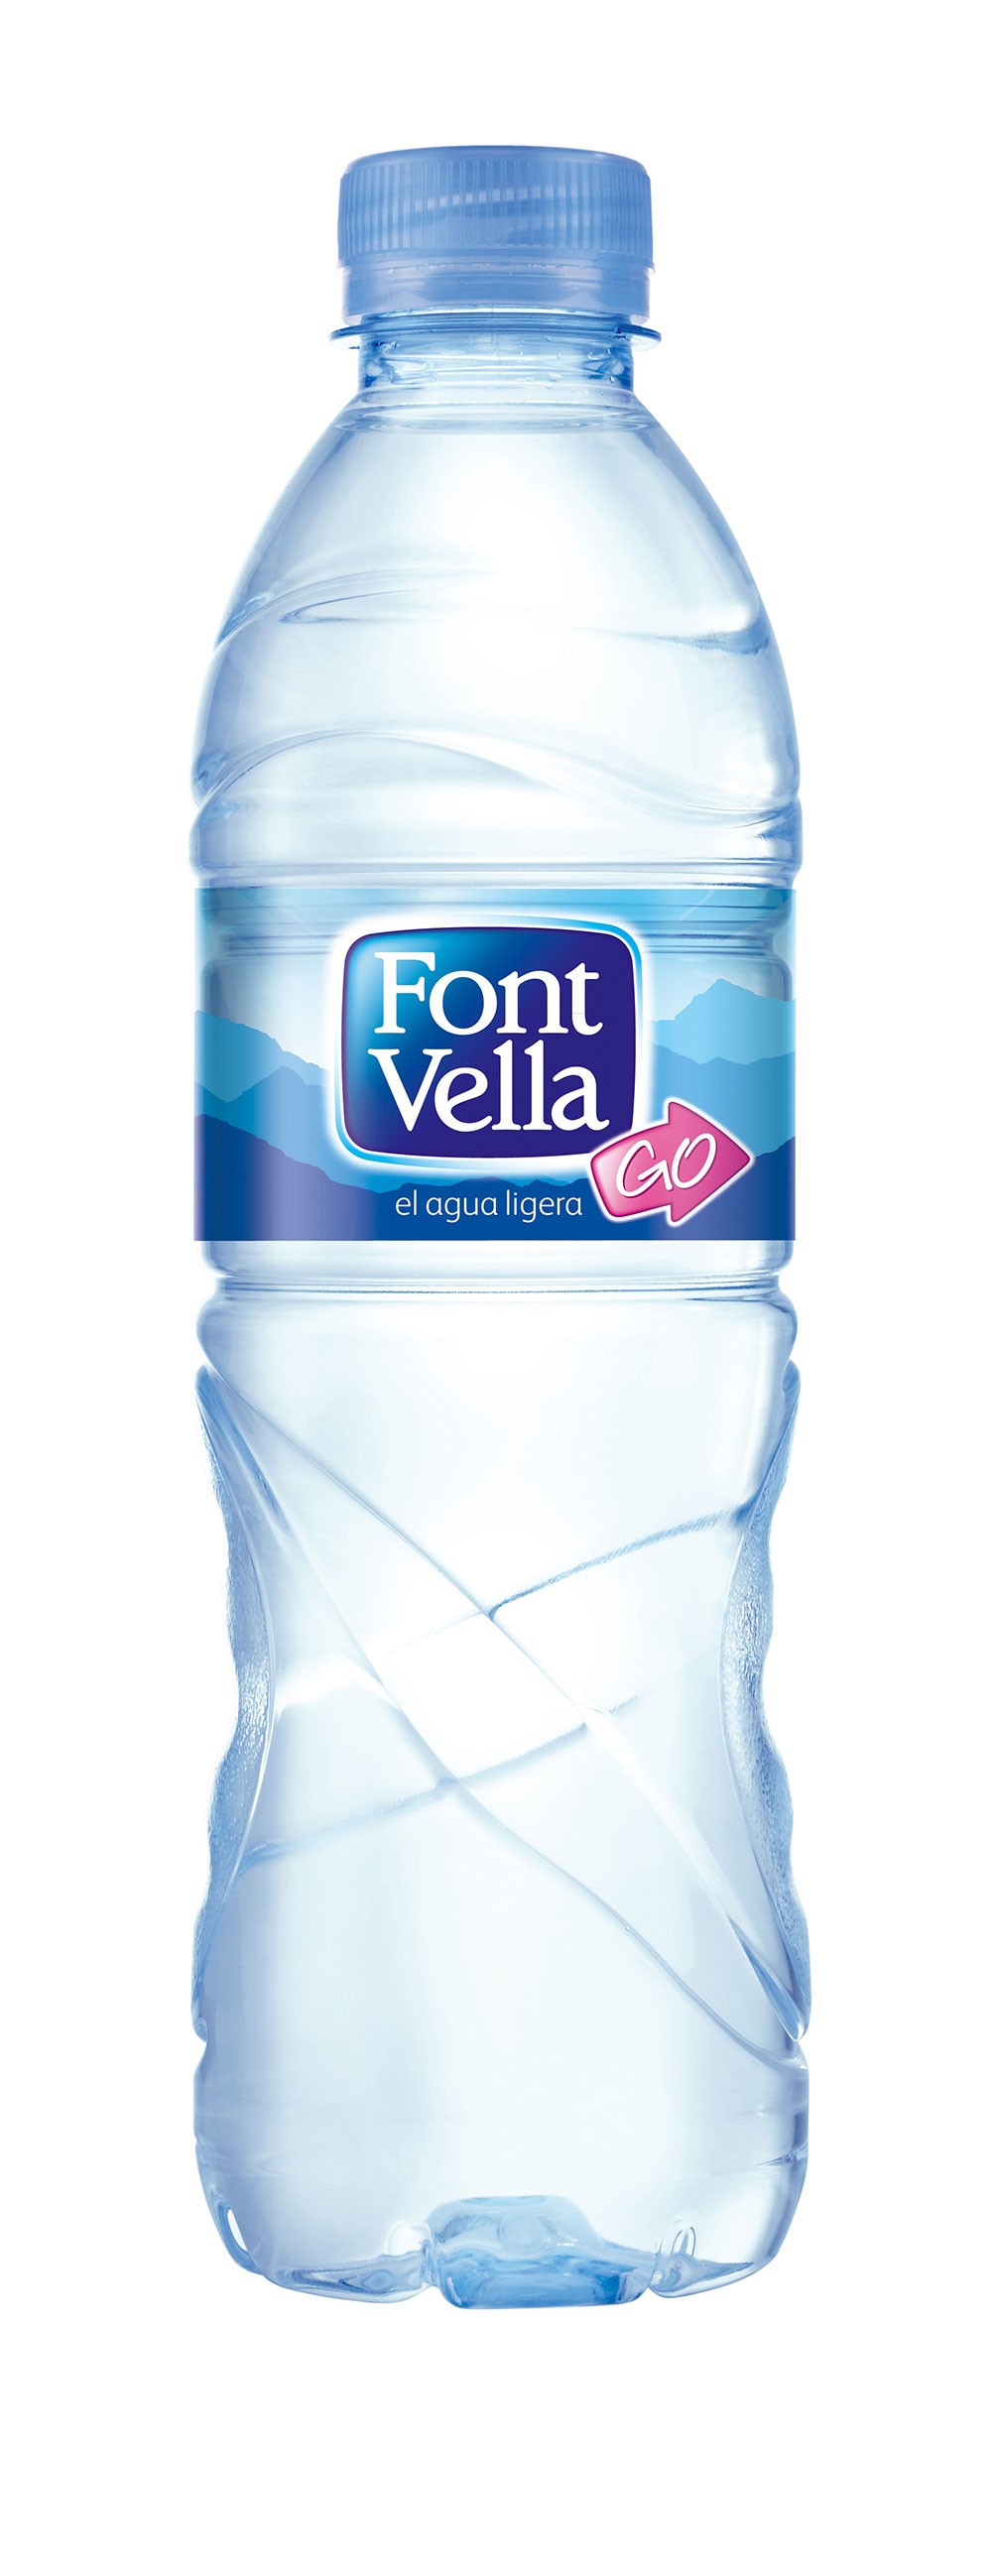 Font Vella 0,33L Pack - FontVella